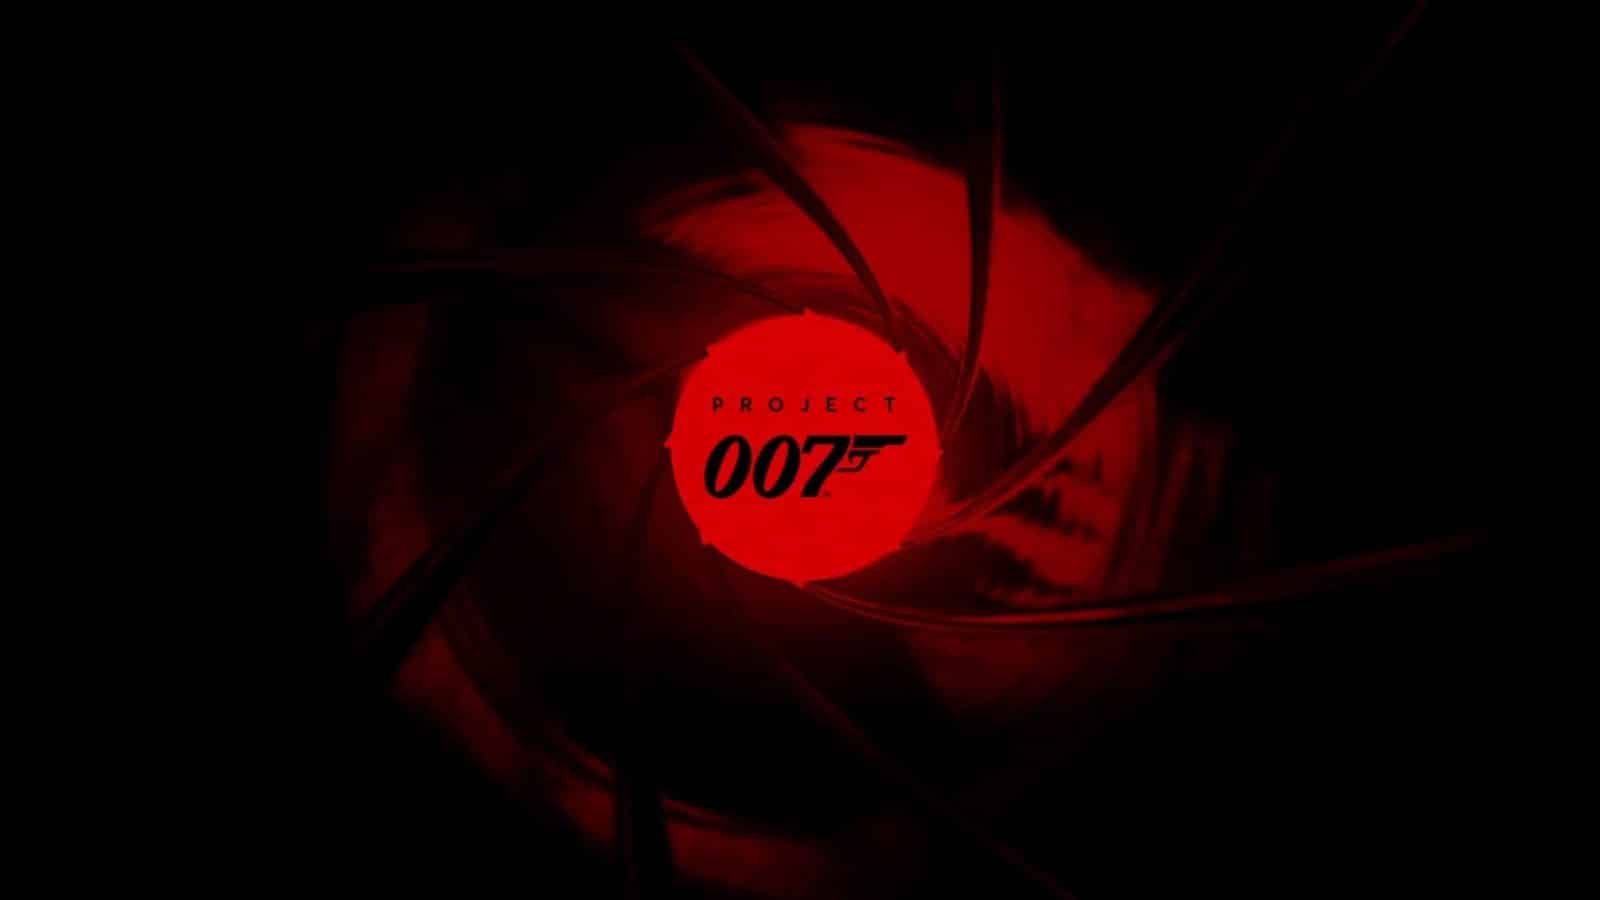 project 007 logo